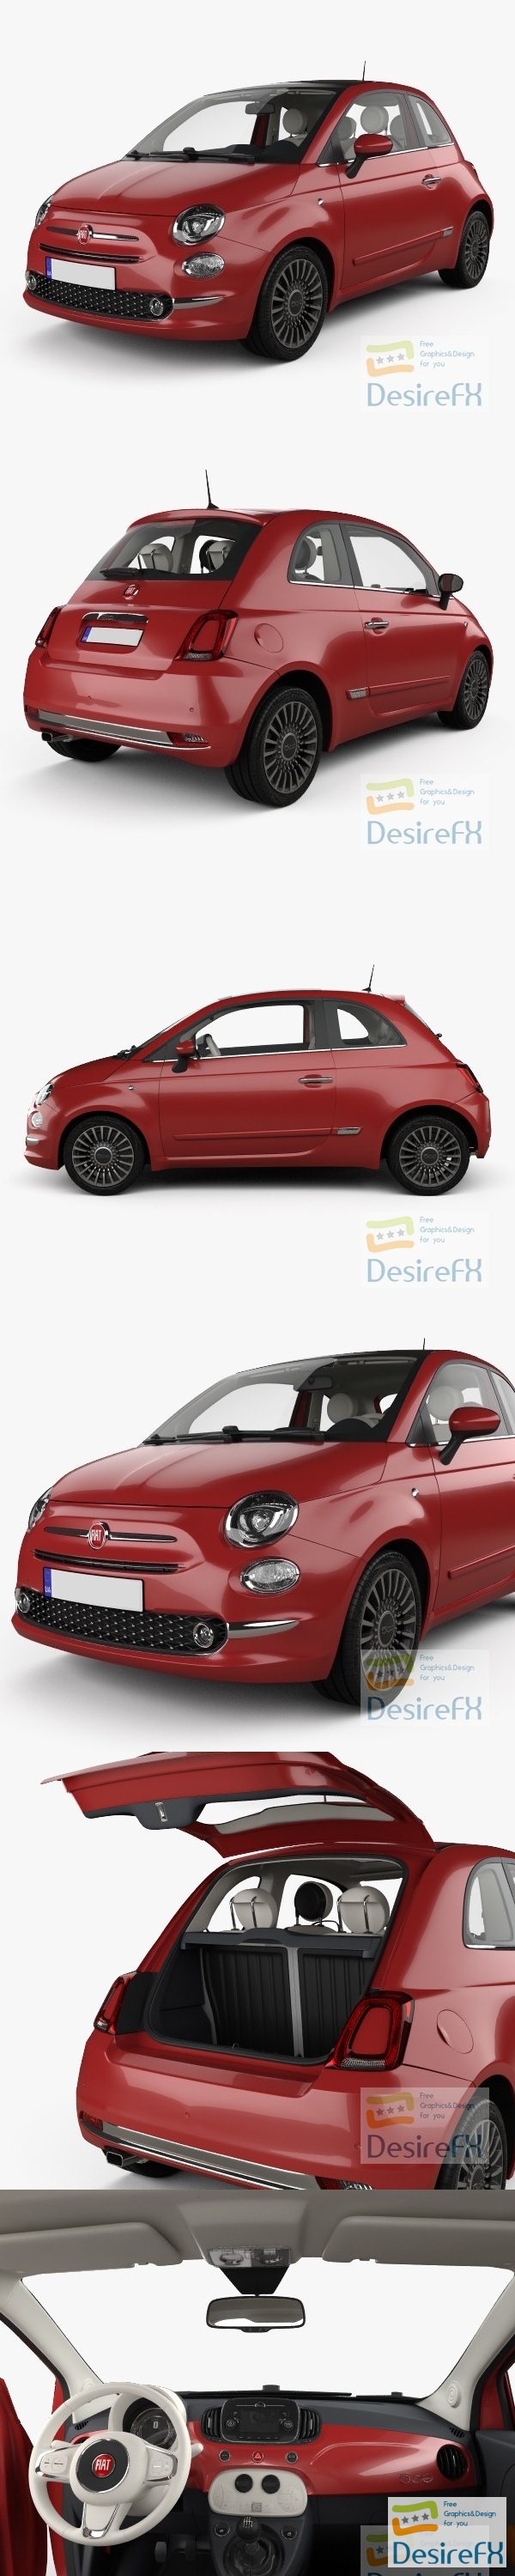 Fiat 500 with HQ interior 2015 3D Model